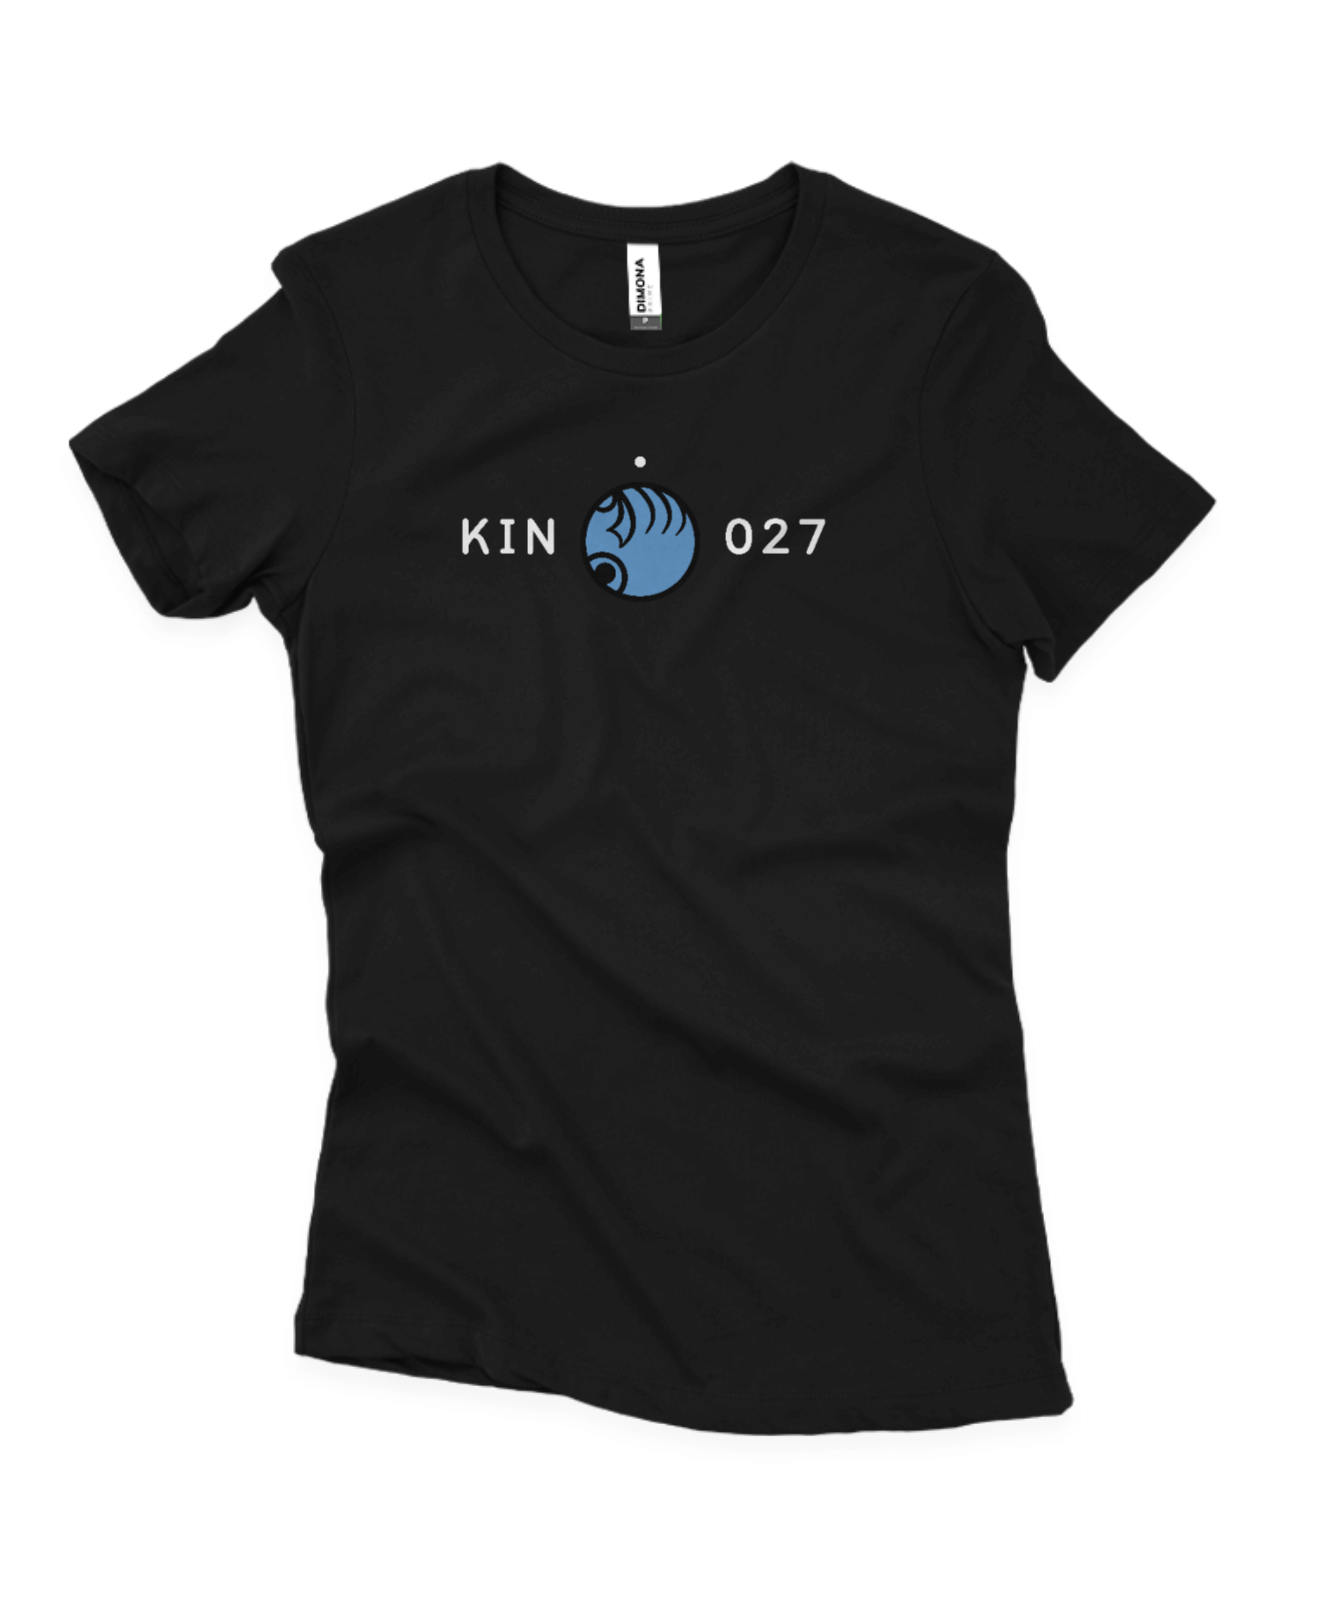 Mockup Camisa Preta - Camisa Feminina Kin 027 - Mão Magnética Azul - Kin 27